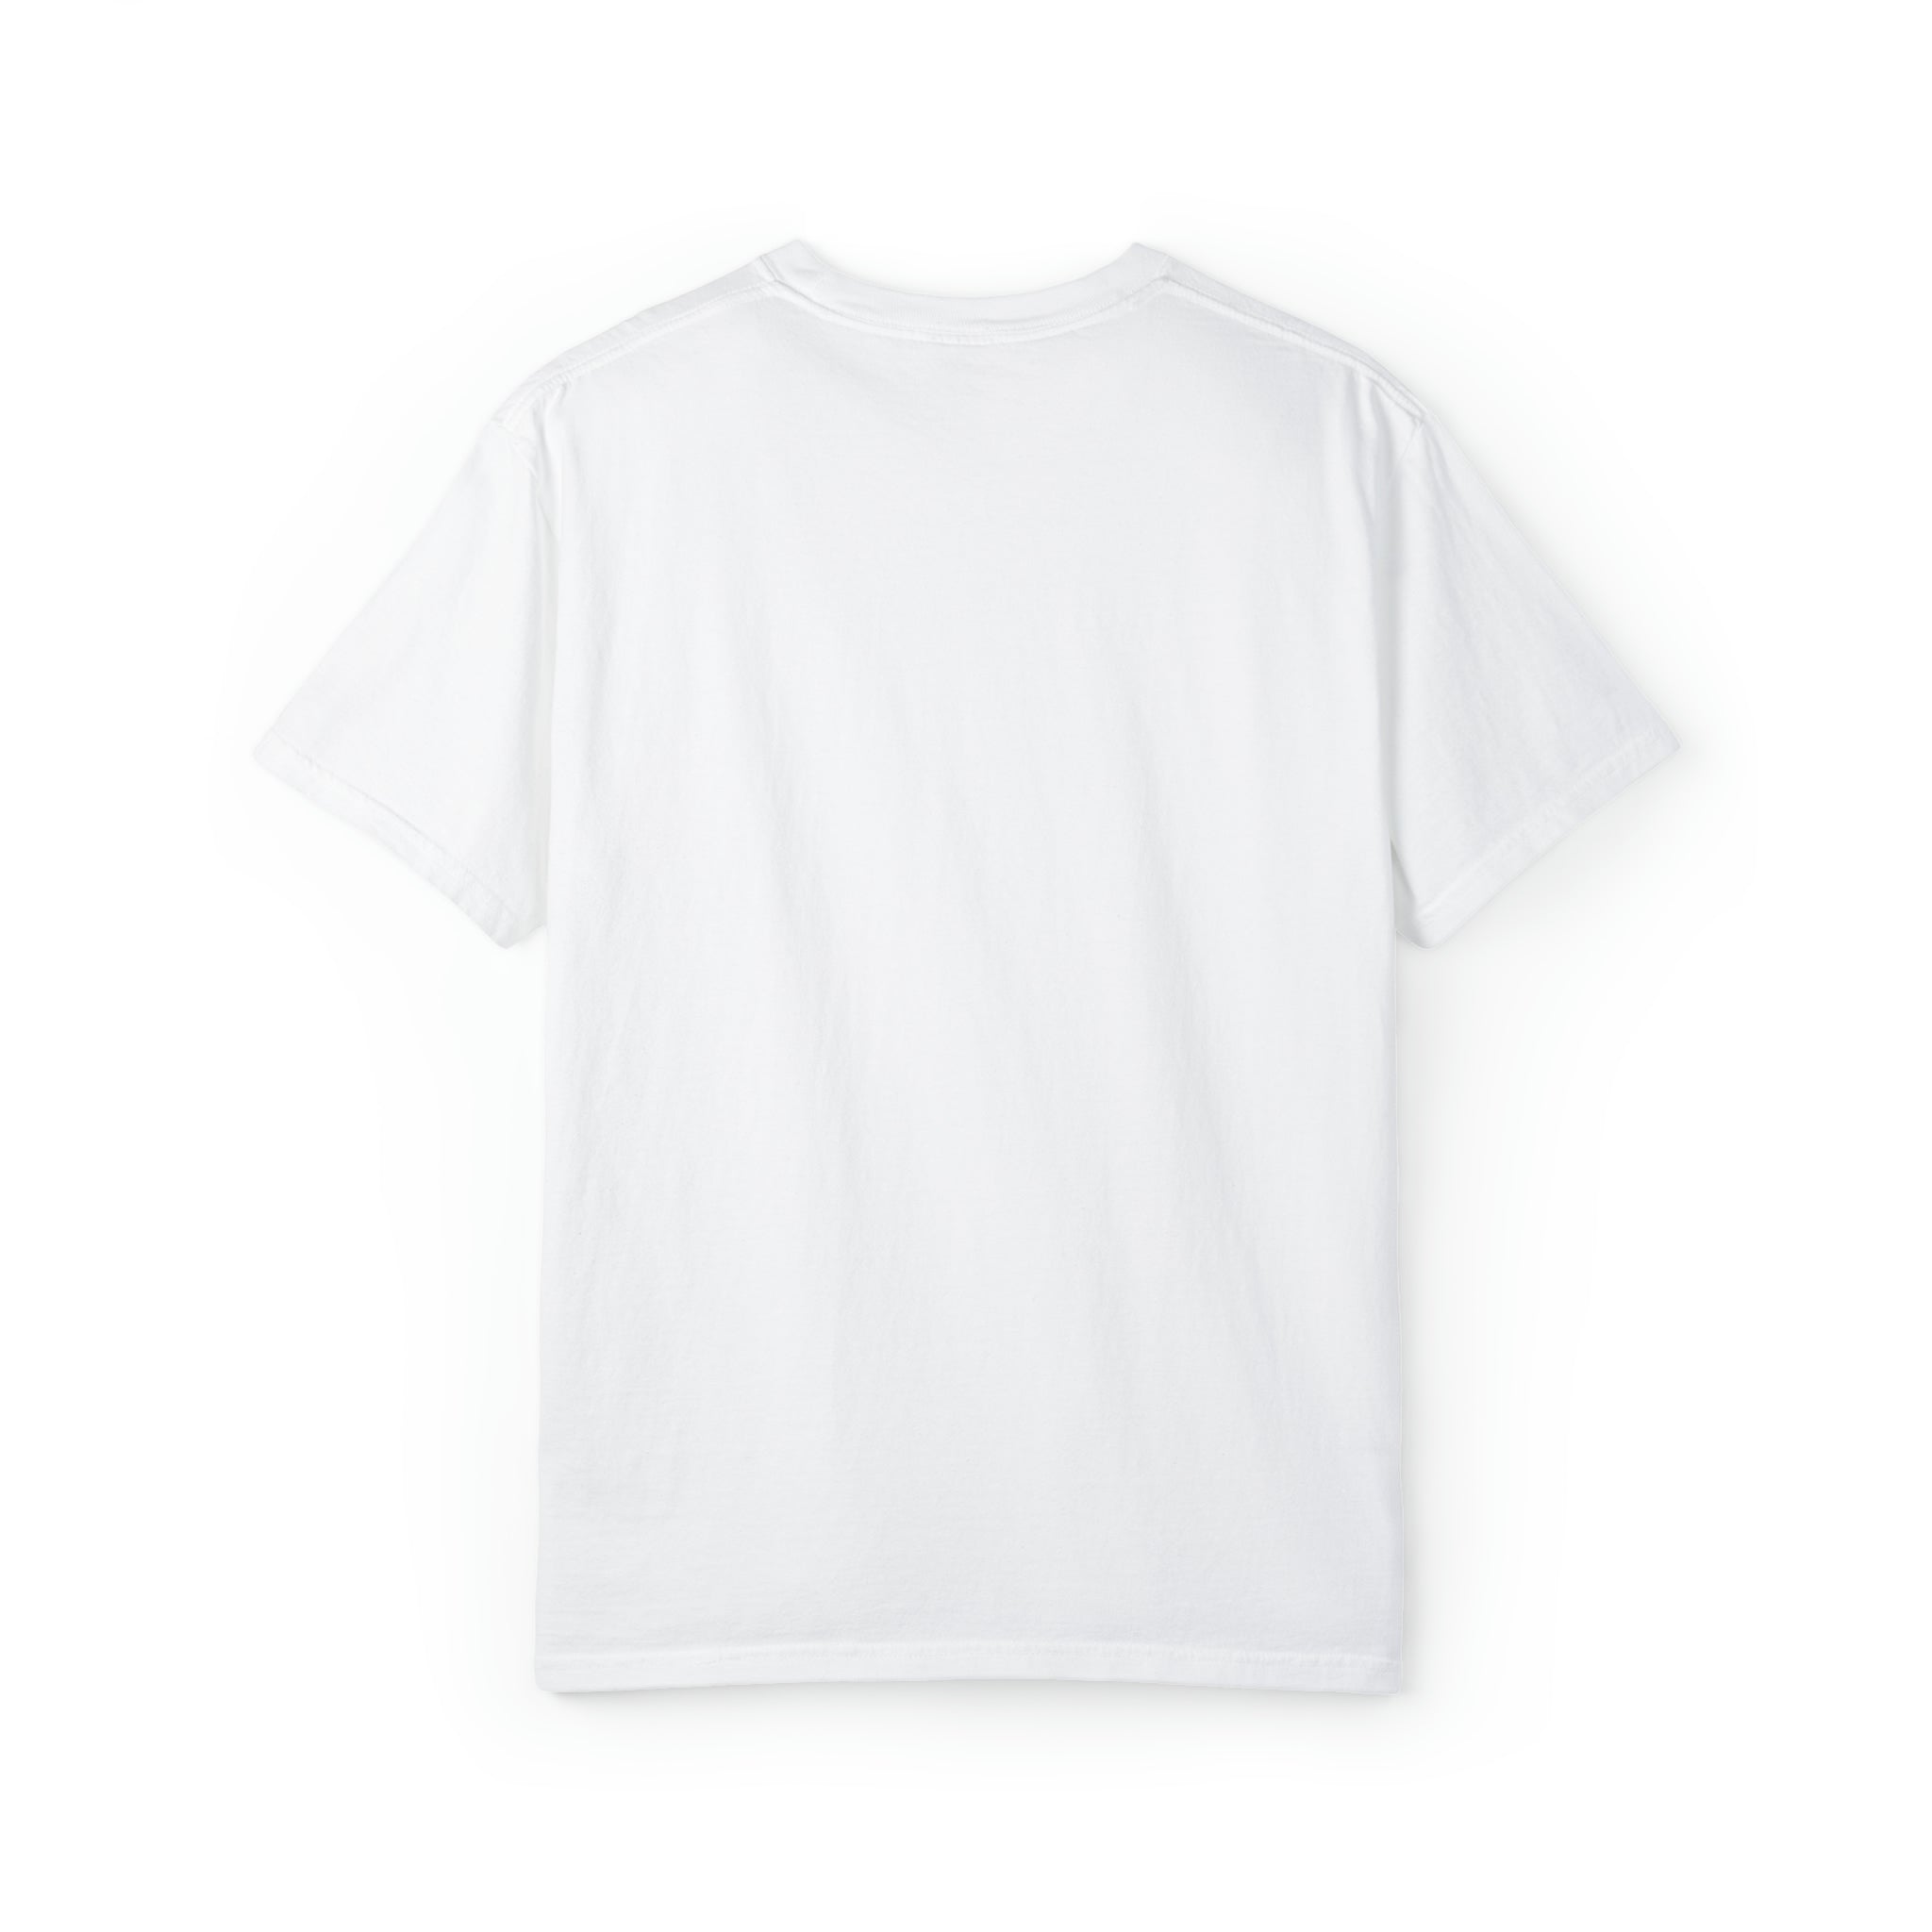 Blind Archer Unisex T-shirt - Variation 3